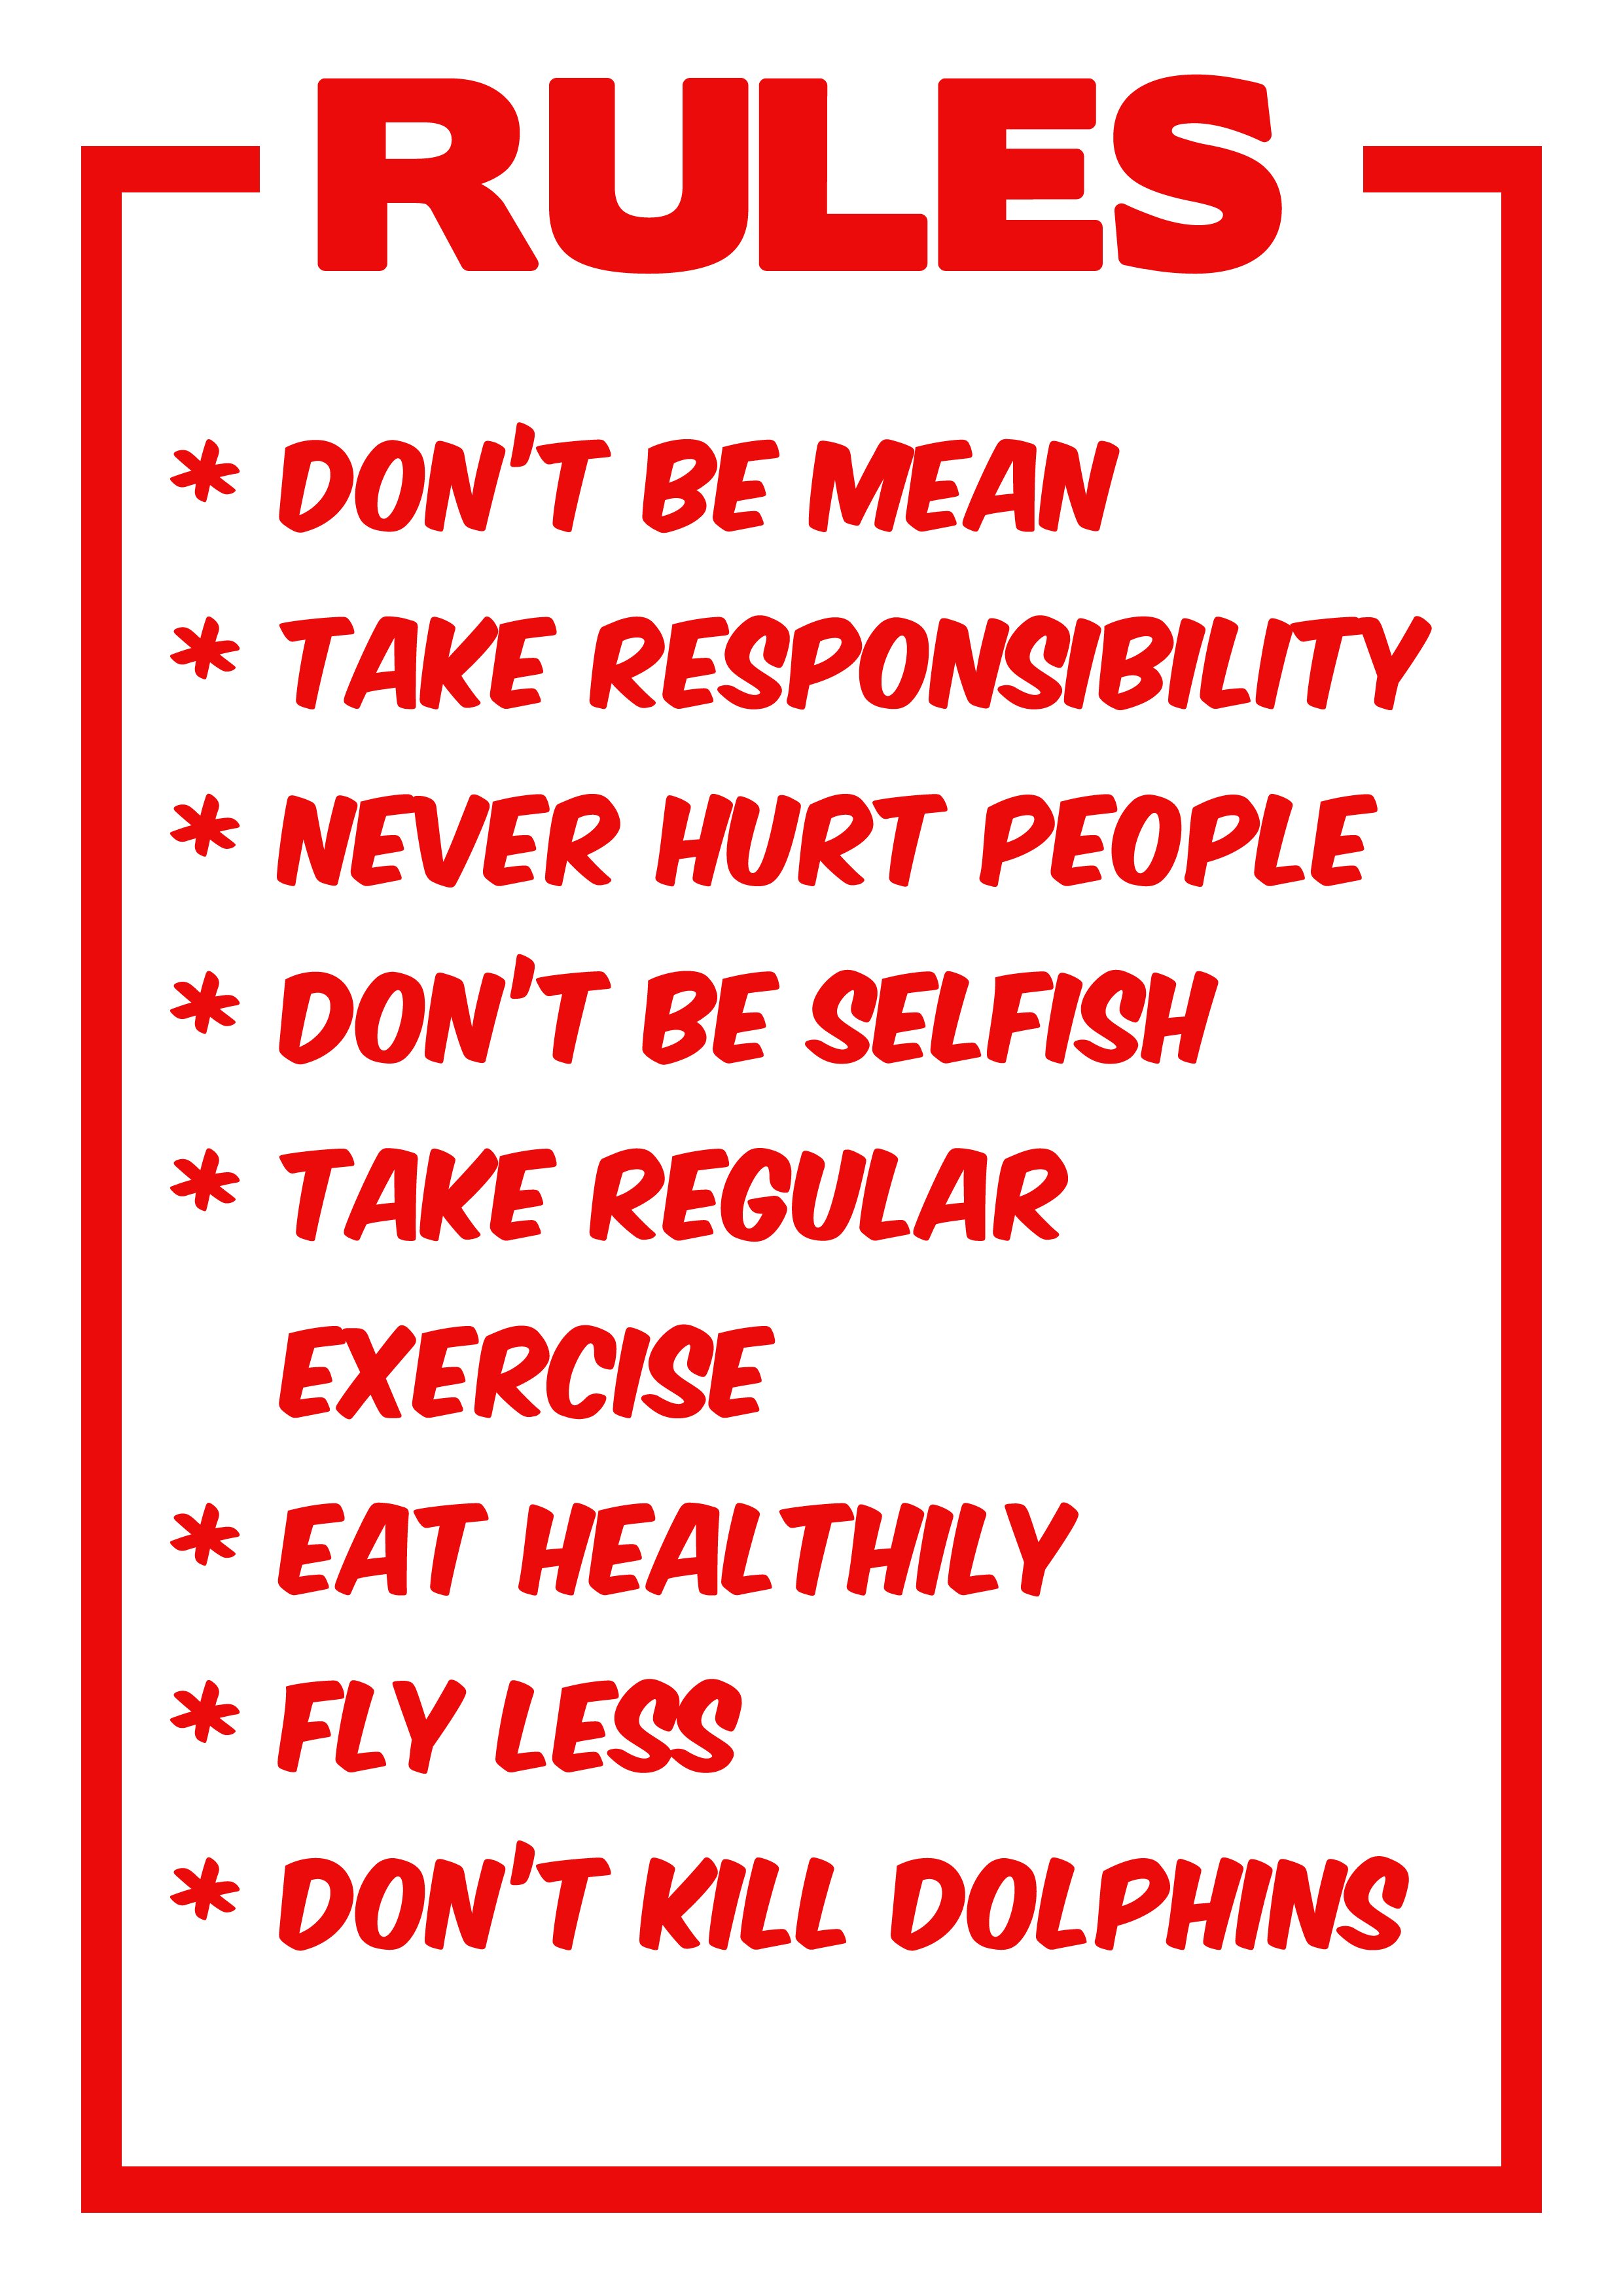 Don't Kill Dolphins.jpg